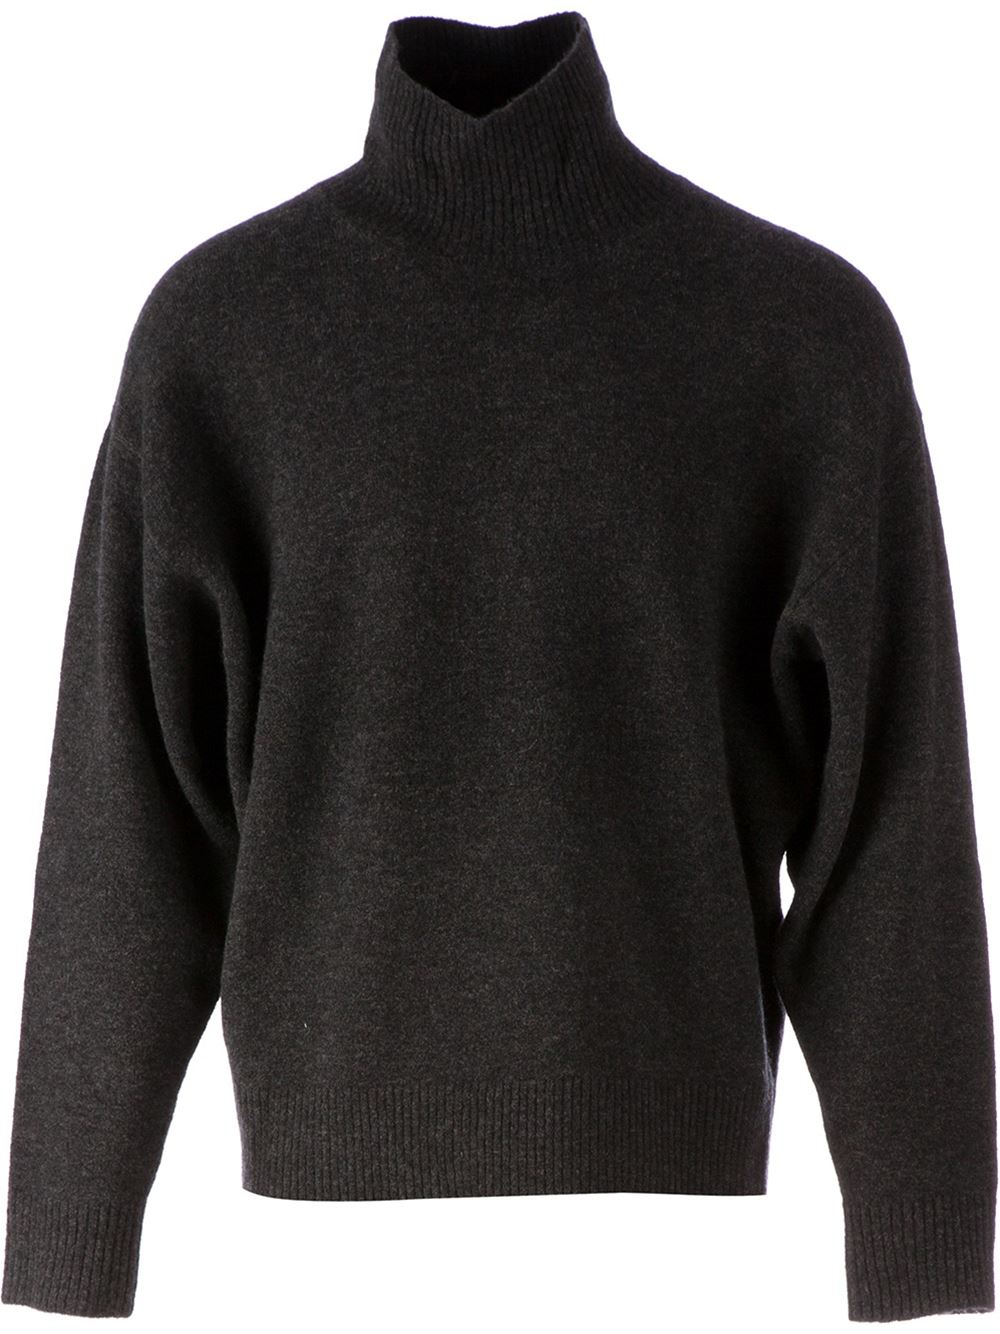 Balenciaga Knit Sweater in Grey (Gray) for Men - Lyst